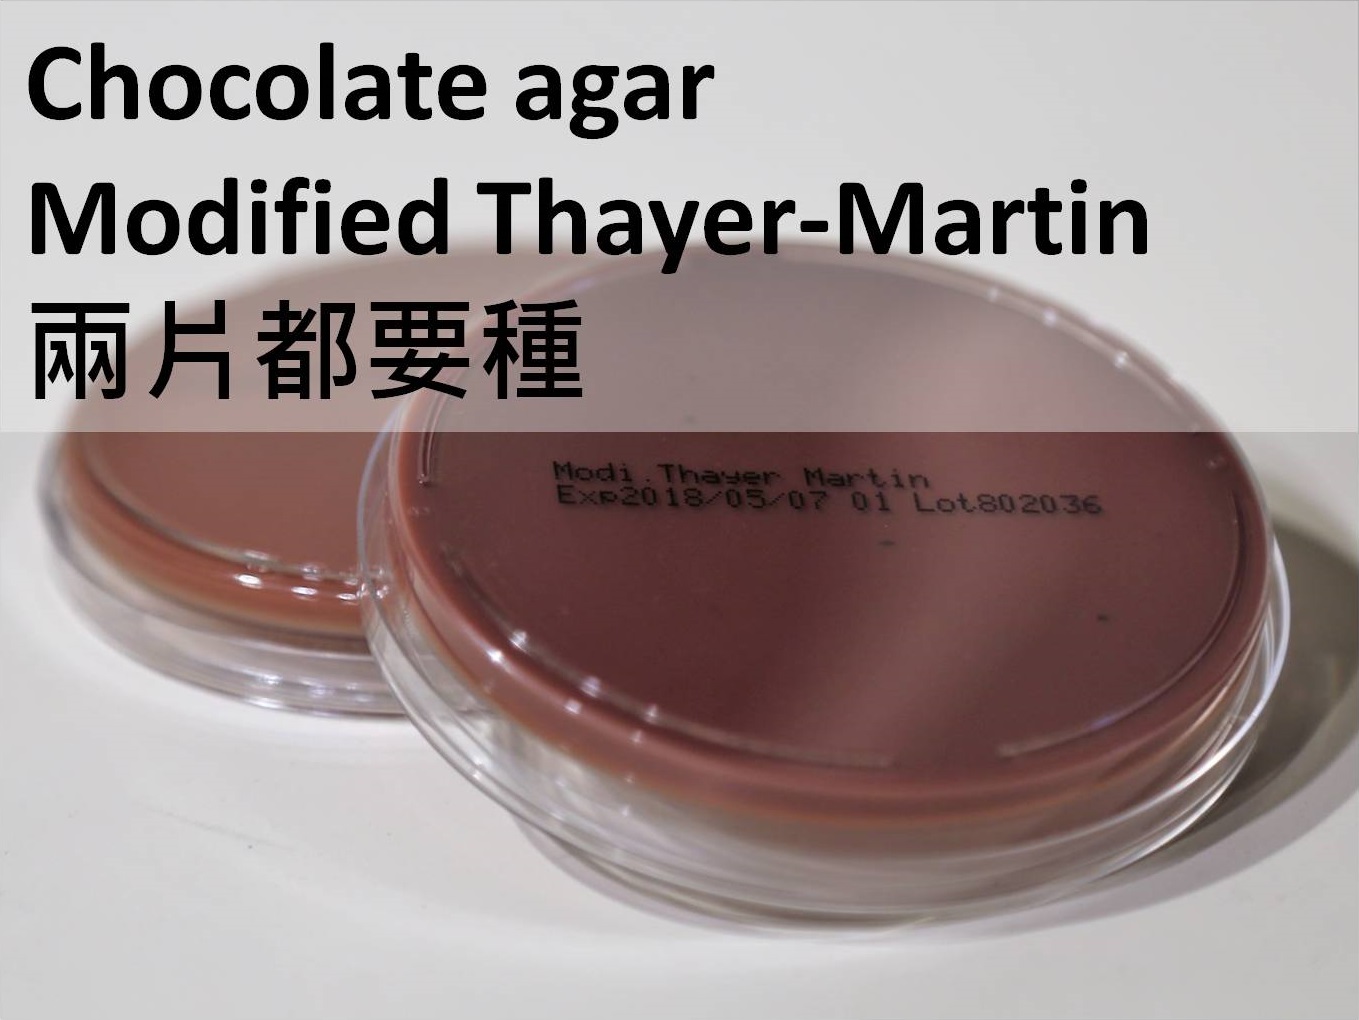 MTM （Modified Thayer-martin medium）